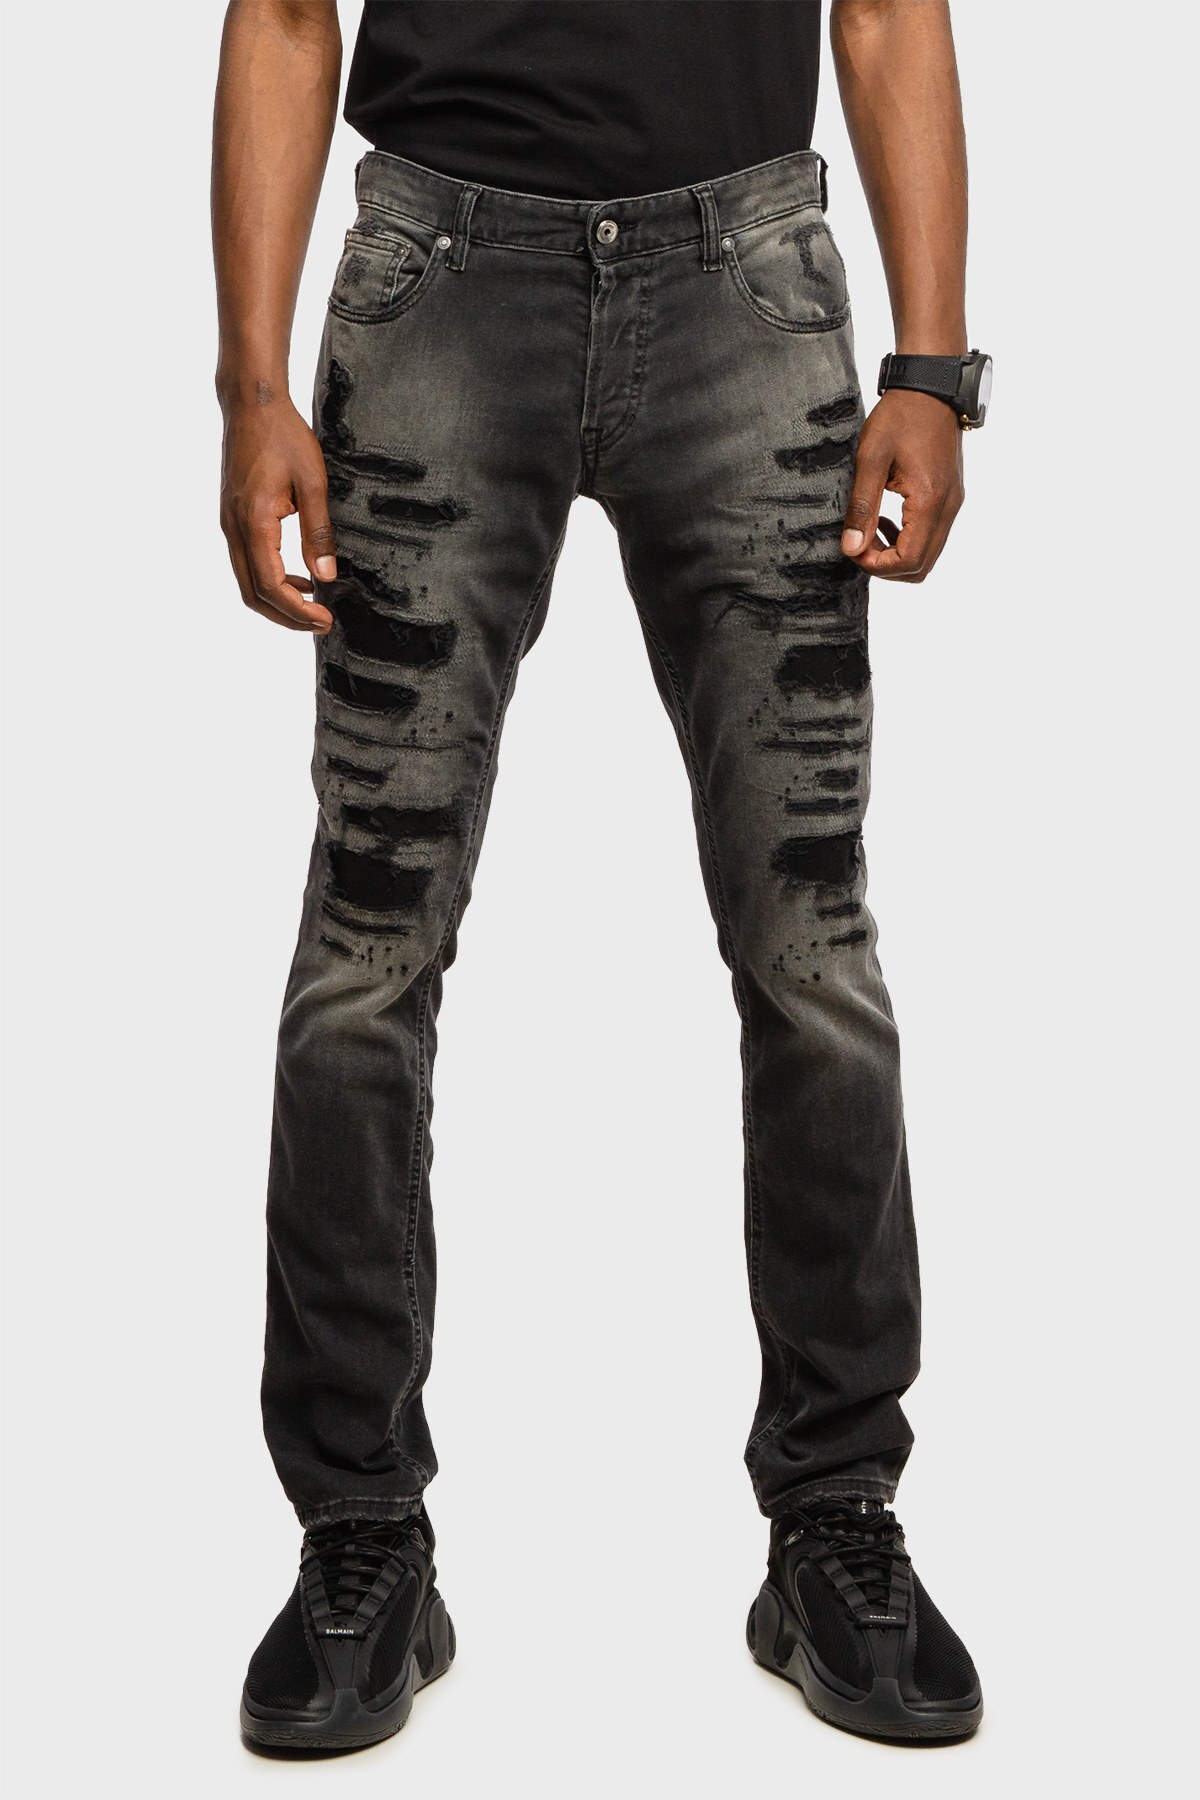 Just Cavalli Yırtık Detaylı Pamuklu Slim Fit Jeans Erkek Kot Pantolon S01LA0143 N31930 900 SİYAH